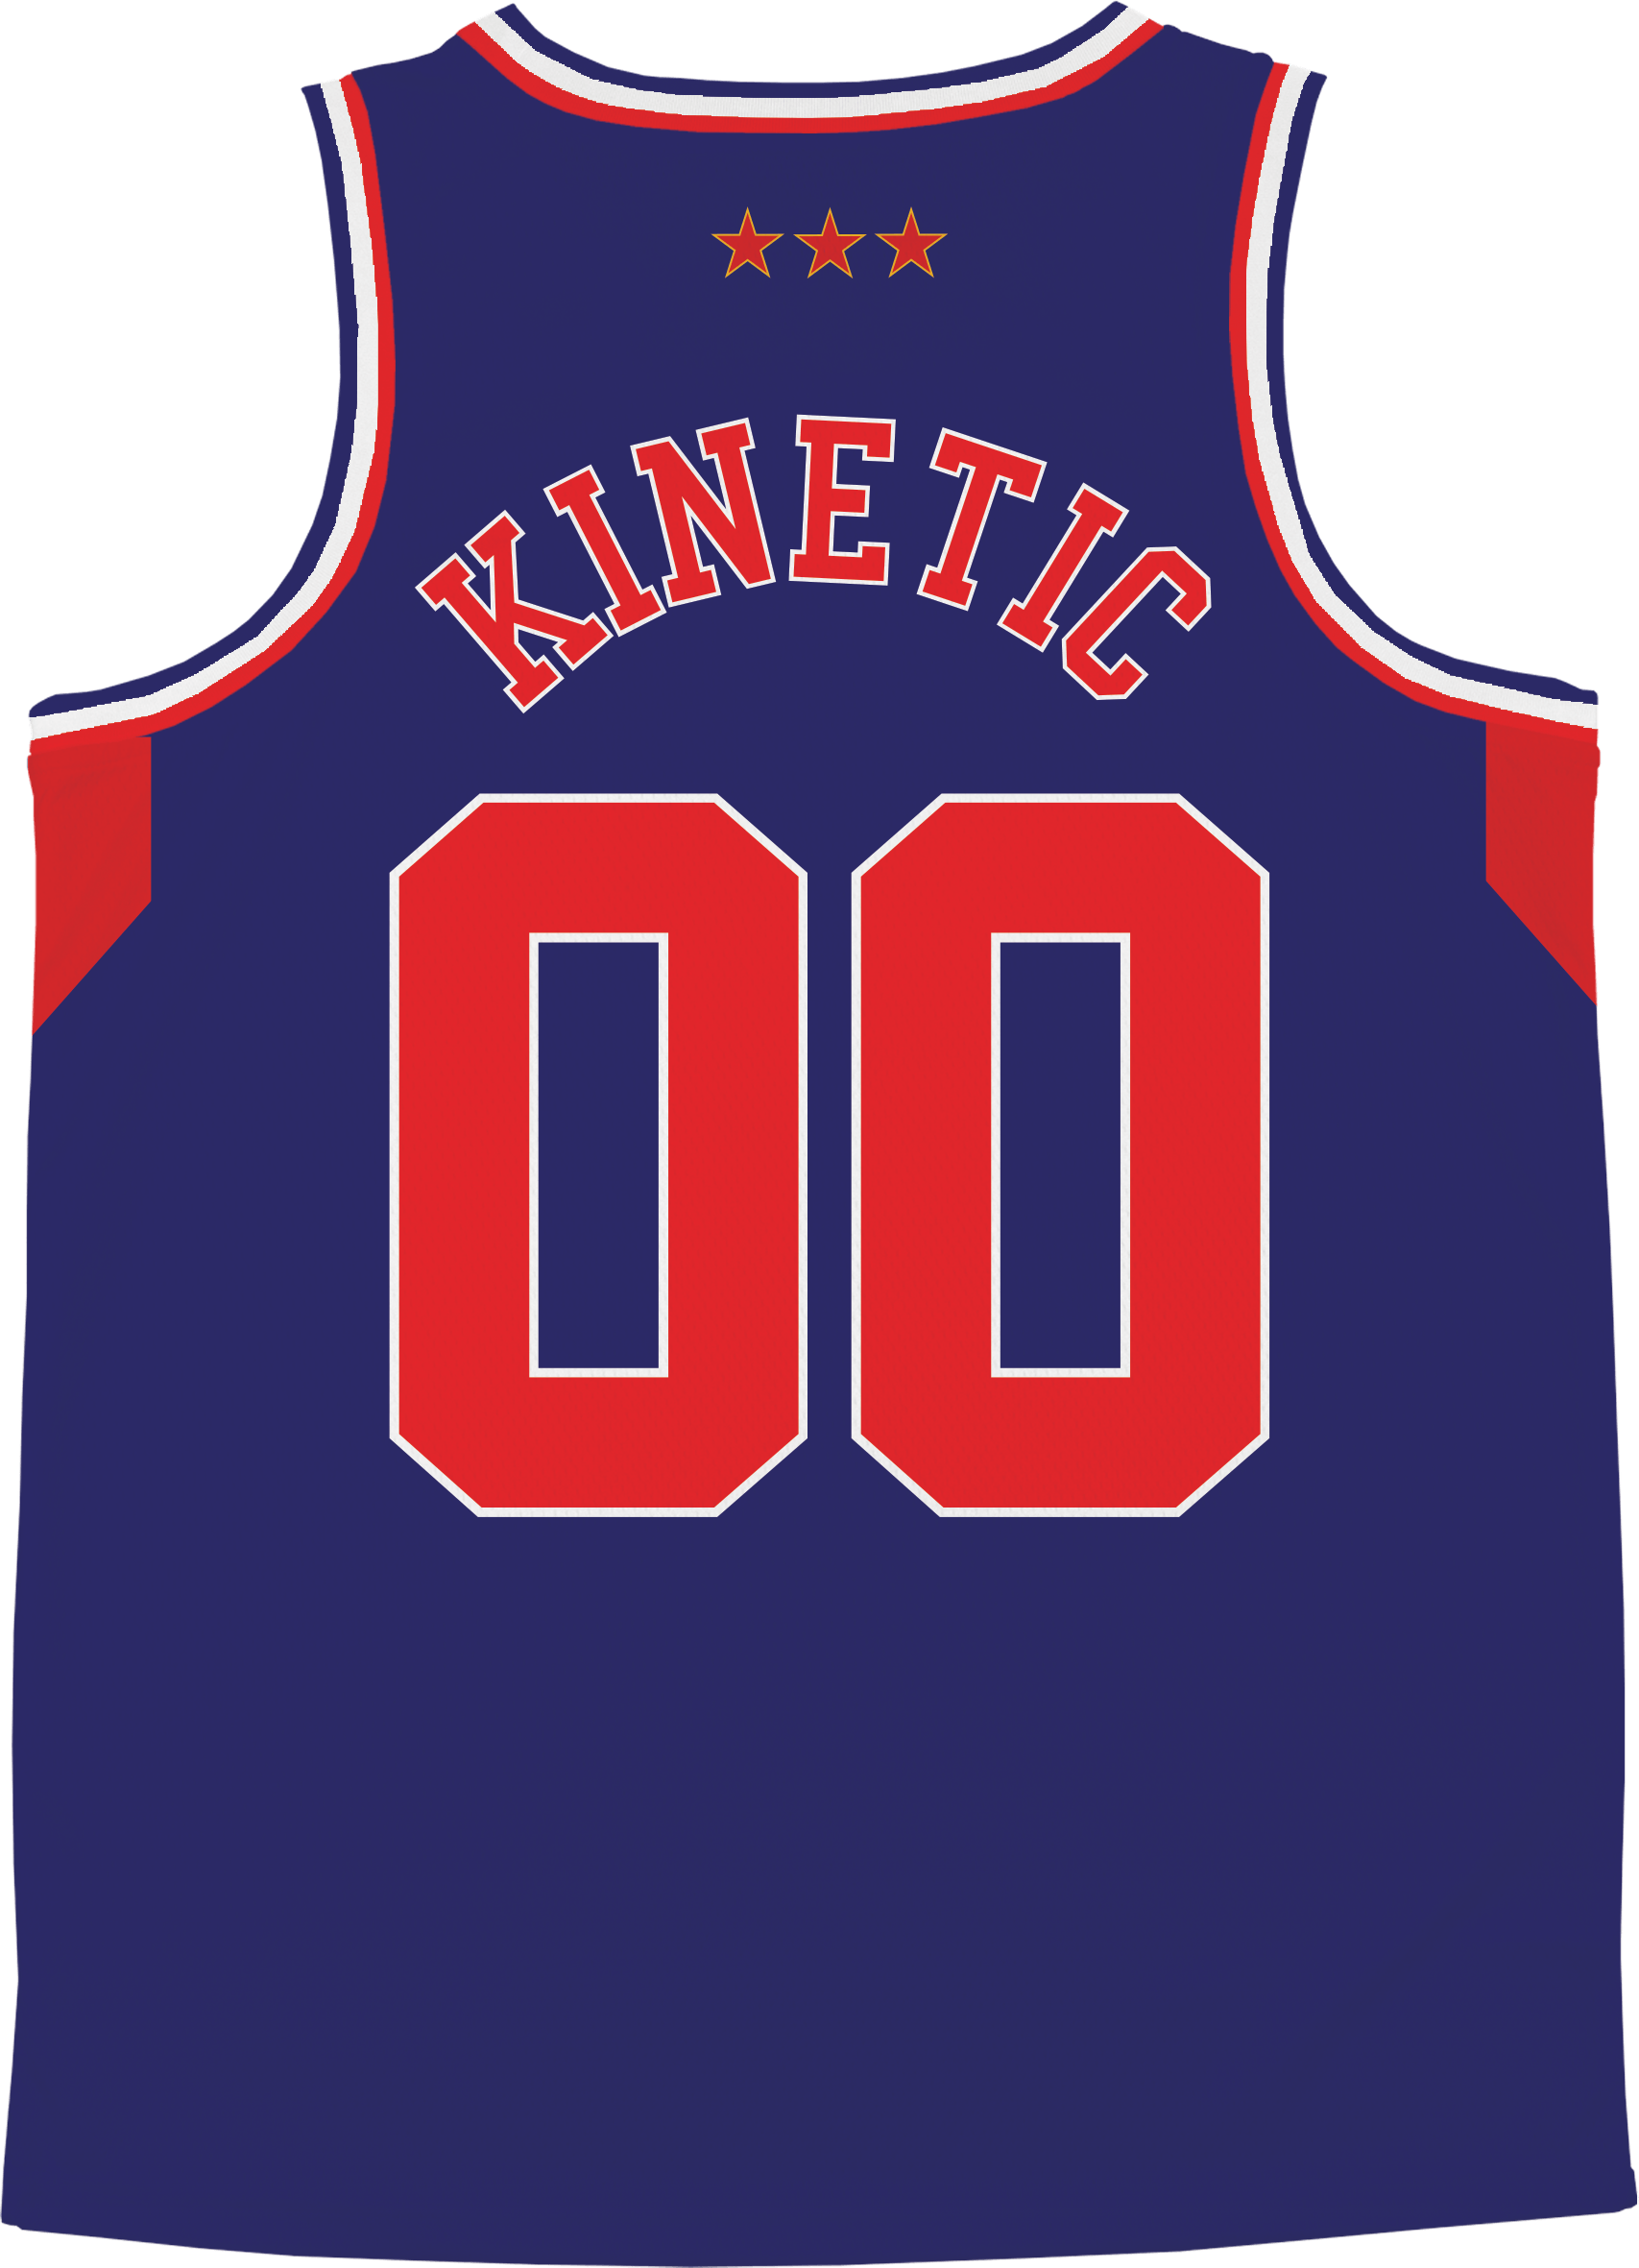 Delta Kappa Epsilon - Retro Ballers Basketball Jersey - Kinetic Society